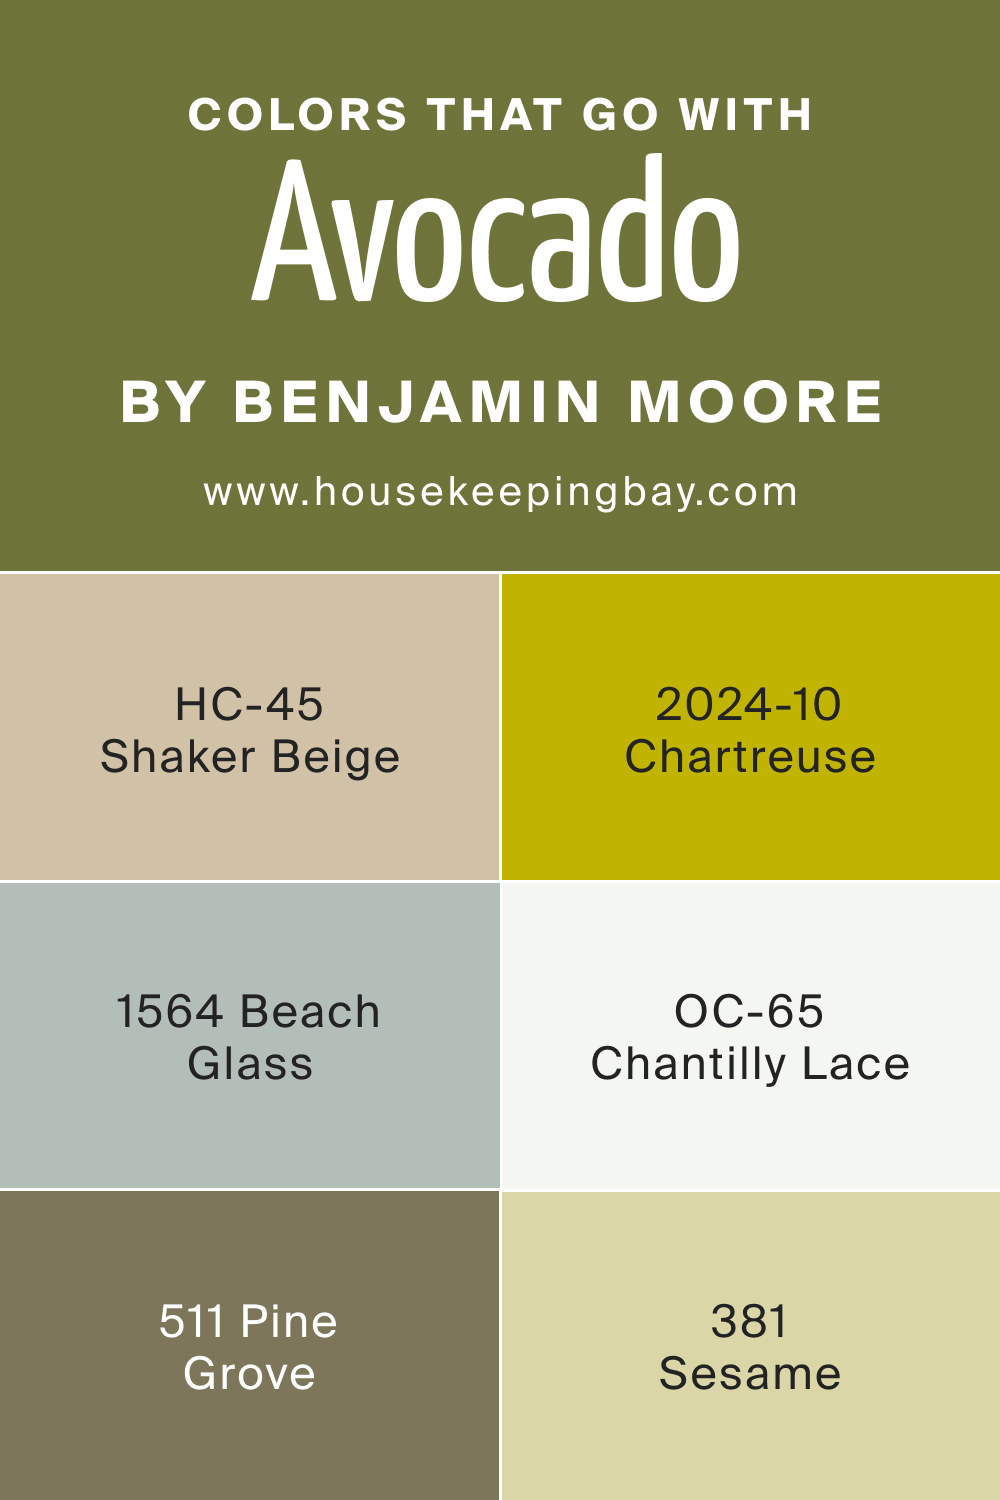 Colors That Go With BM Avocado 2145-10